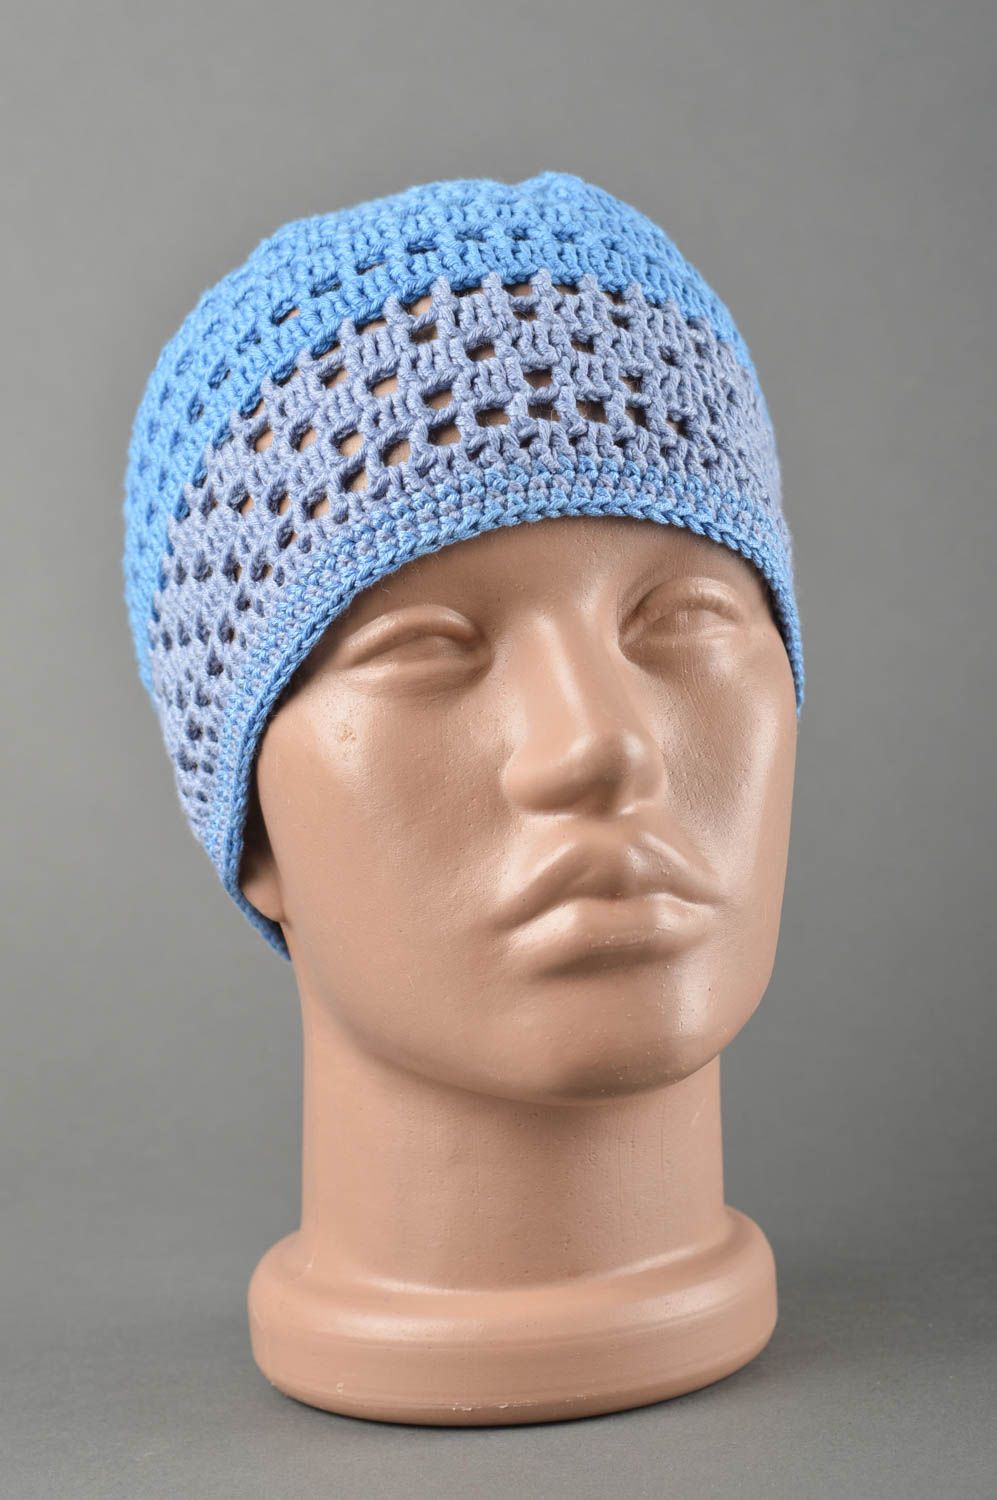 Designer hat crochet baby hat infant hats handmade kids accessories kids gifts photo 1